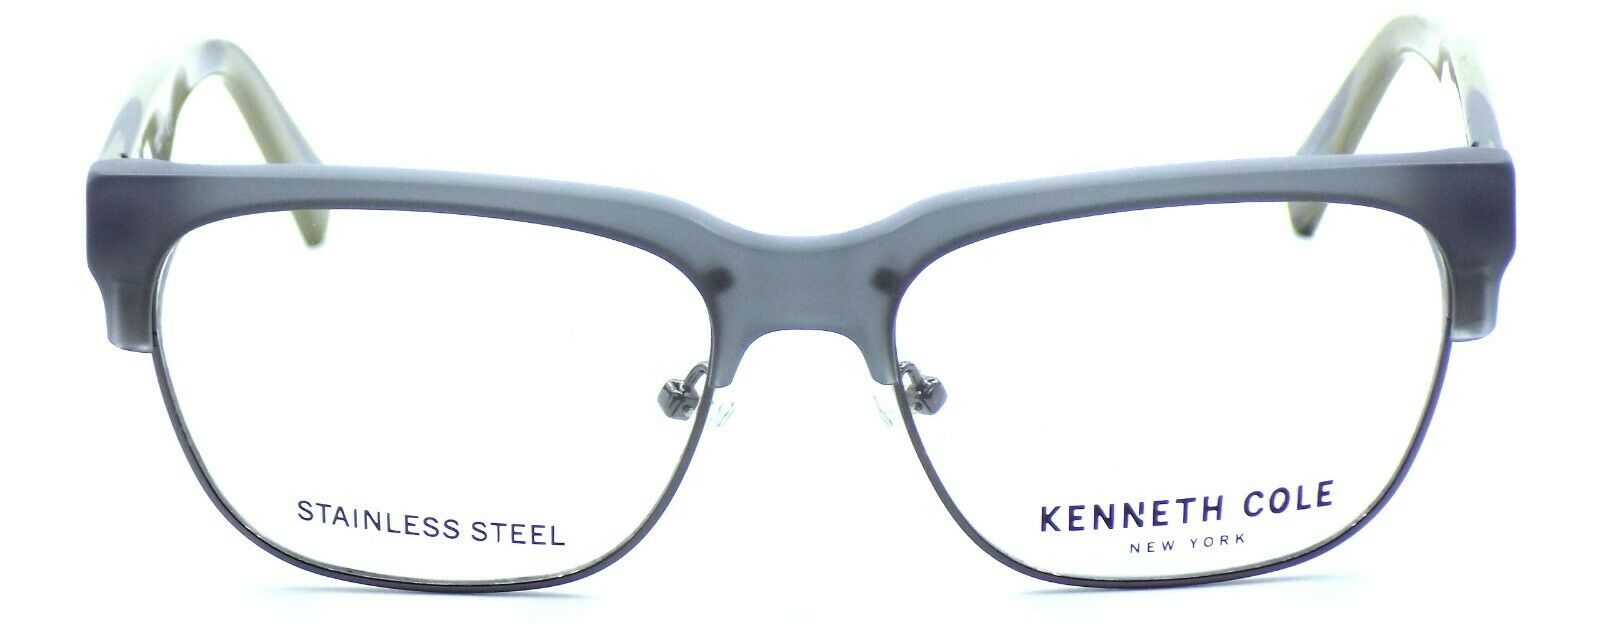 2-Kenneth Cole NY KC0257 020 Men's Eyeglasses Frames 53-16-140 Gray + CASE-664689888719-IKSpecs